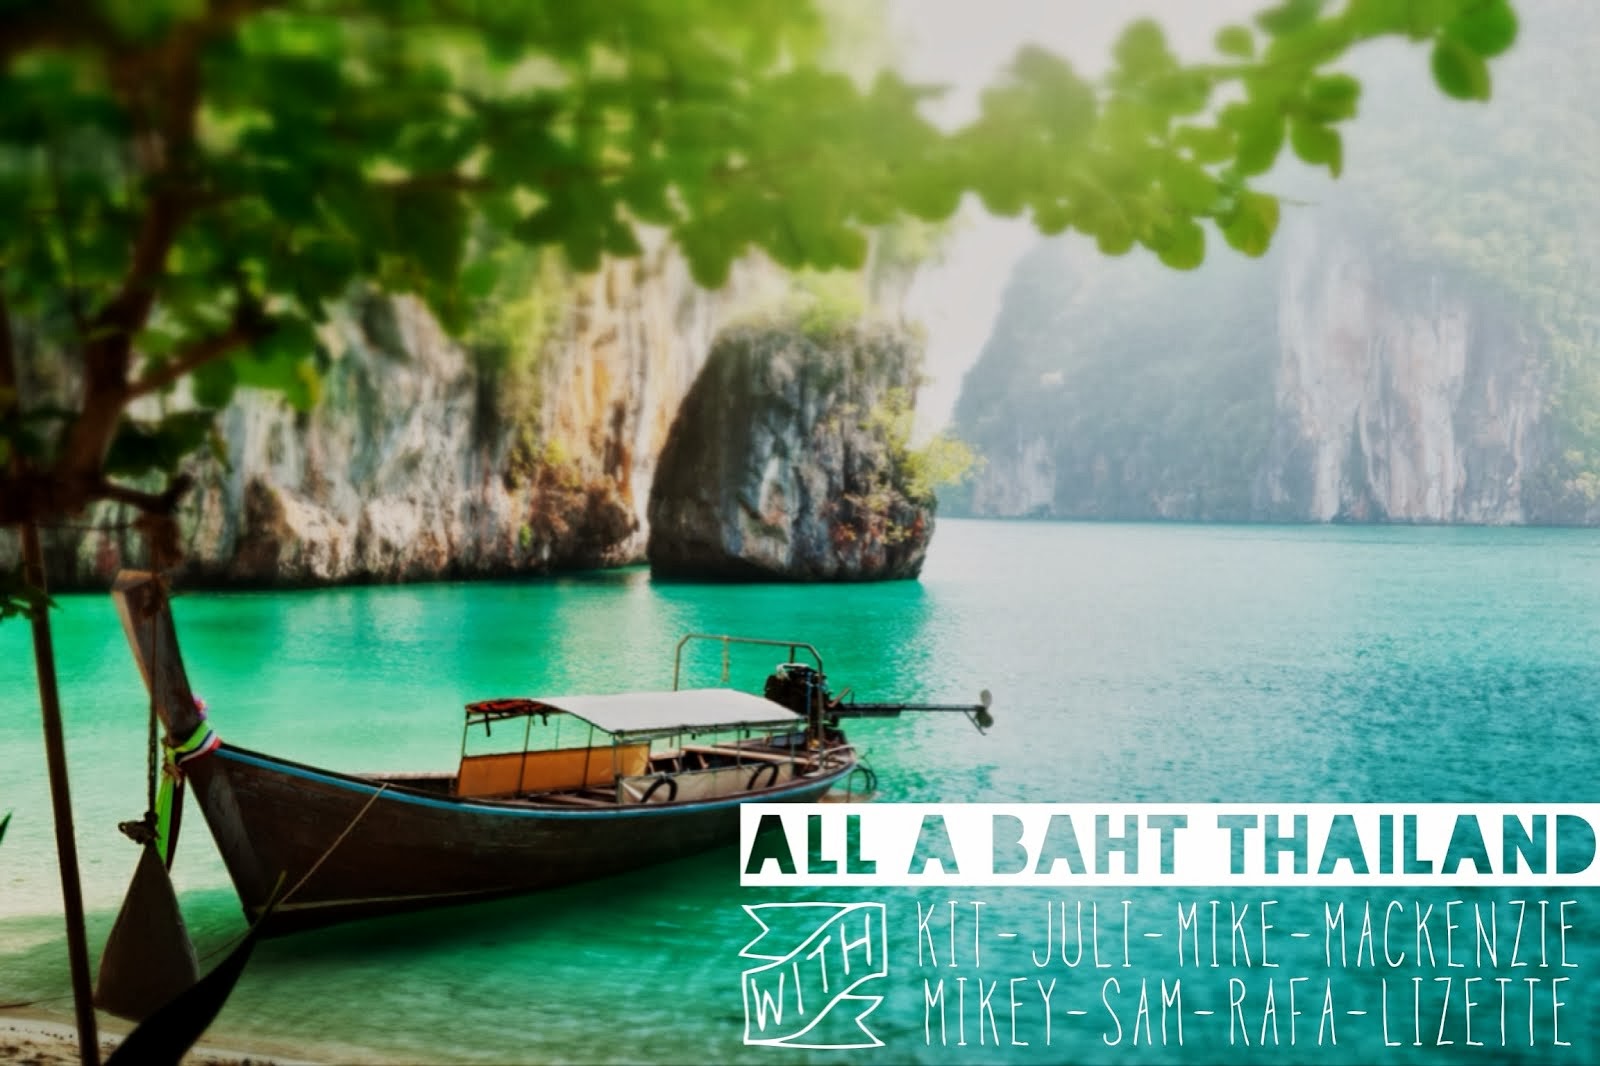 All A-Baht Thailand